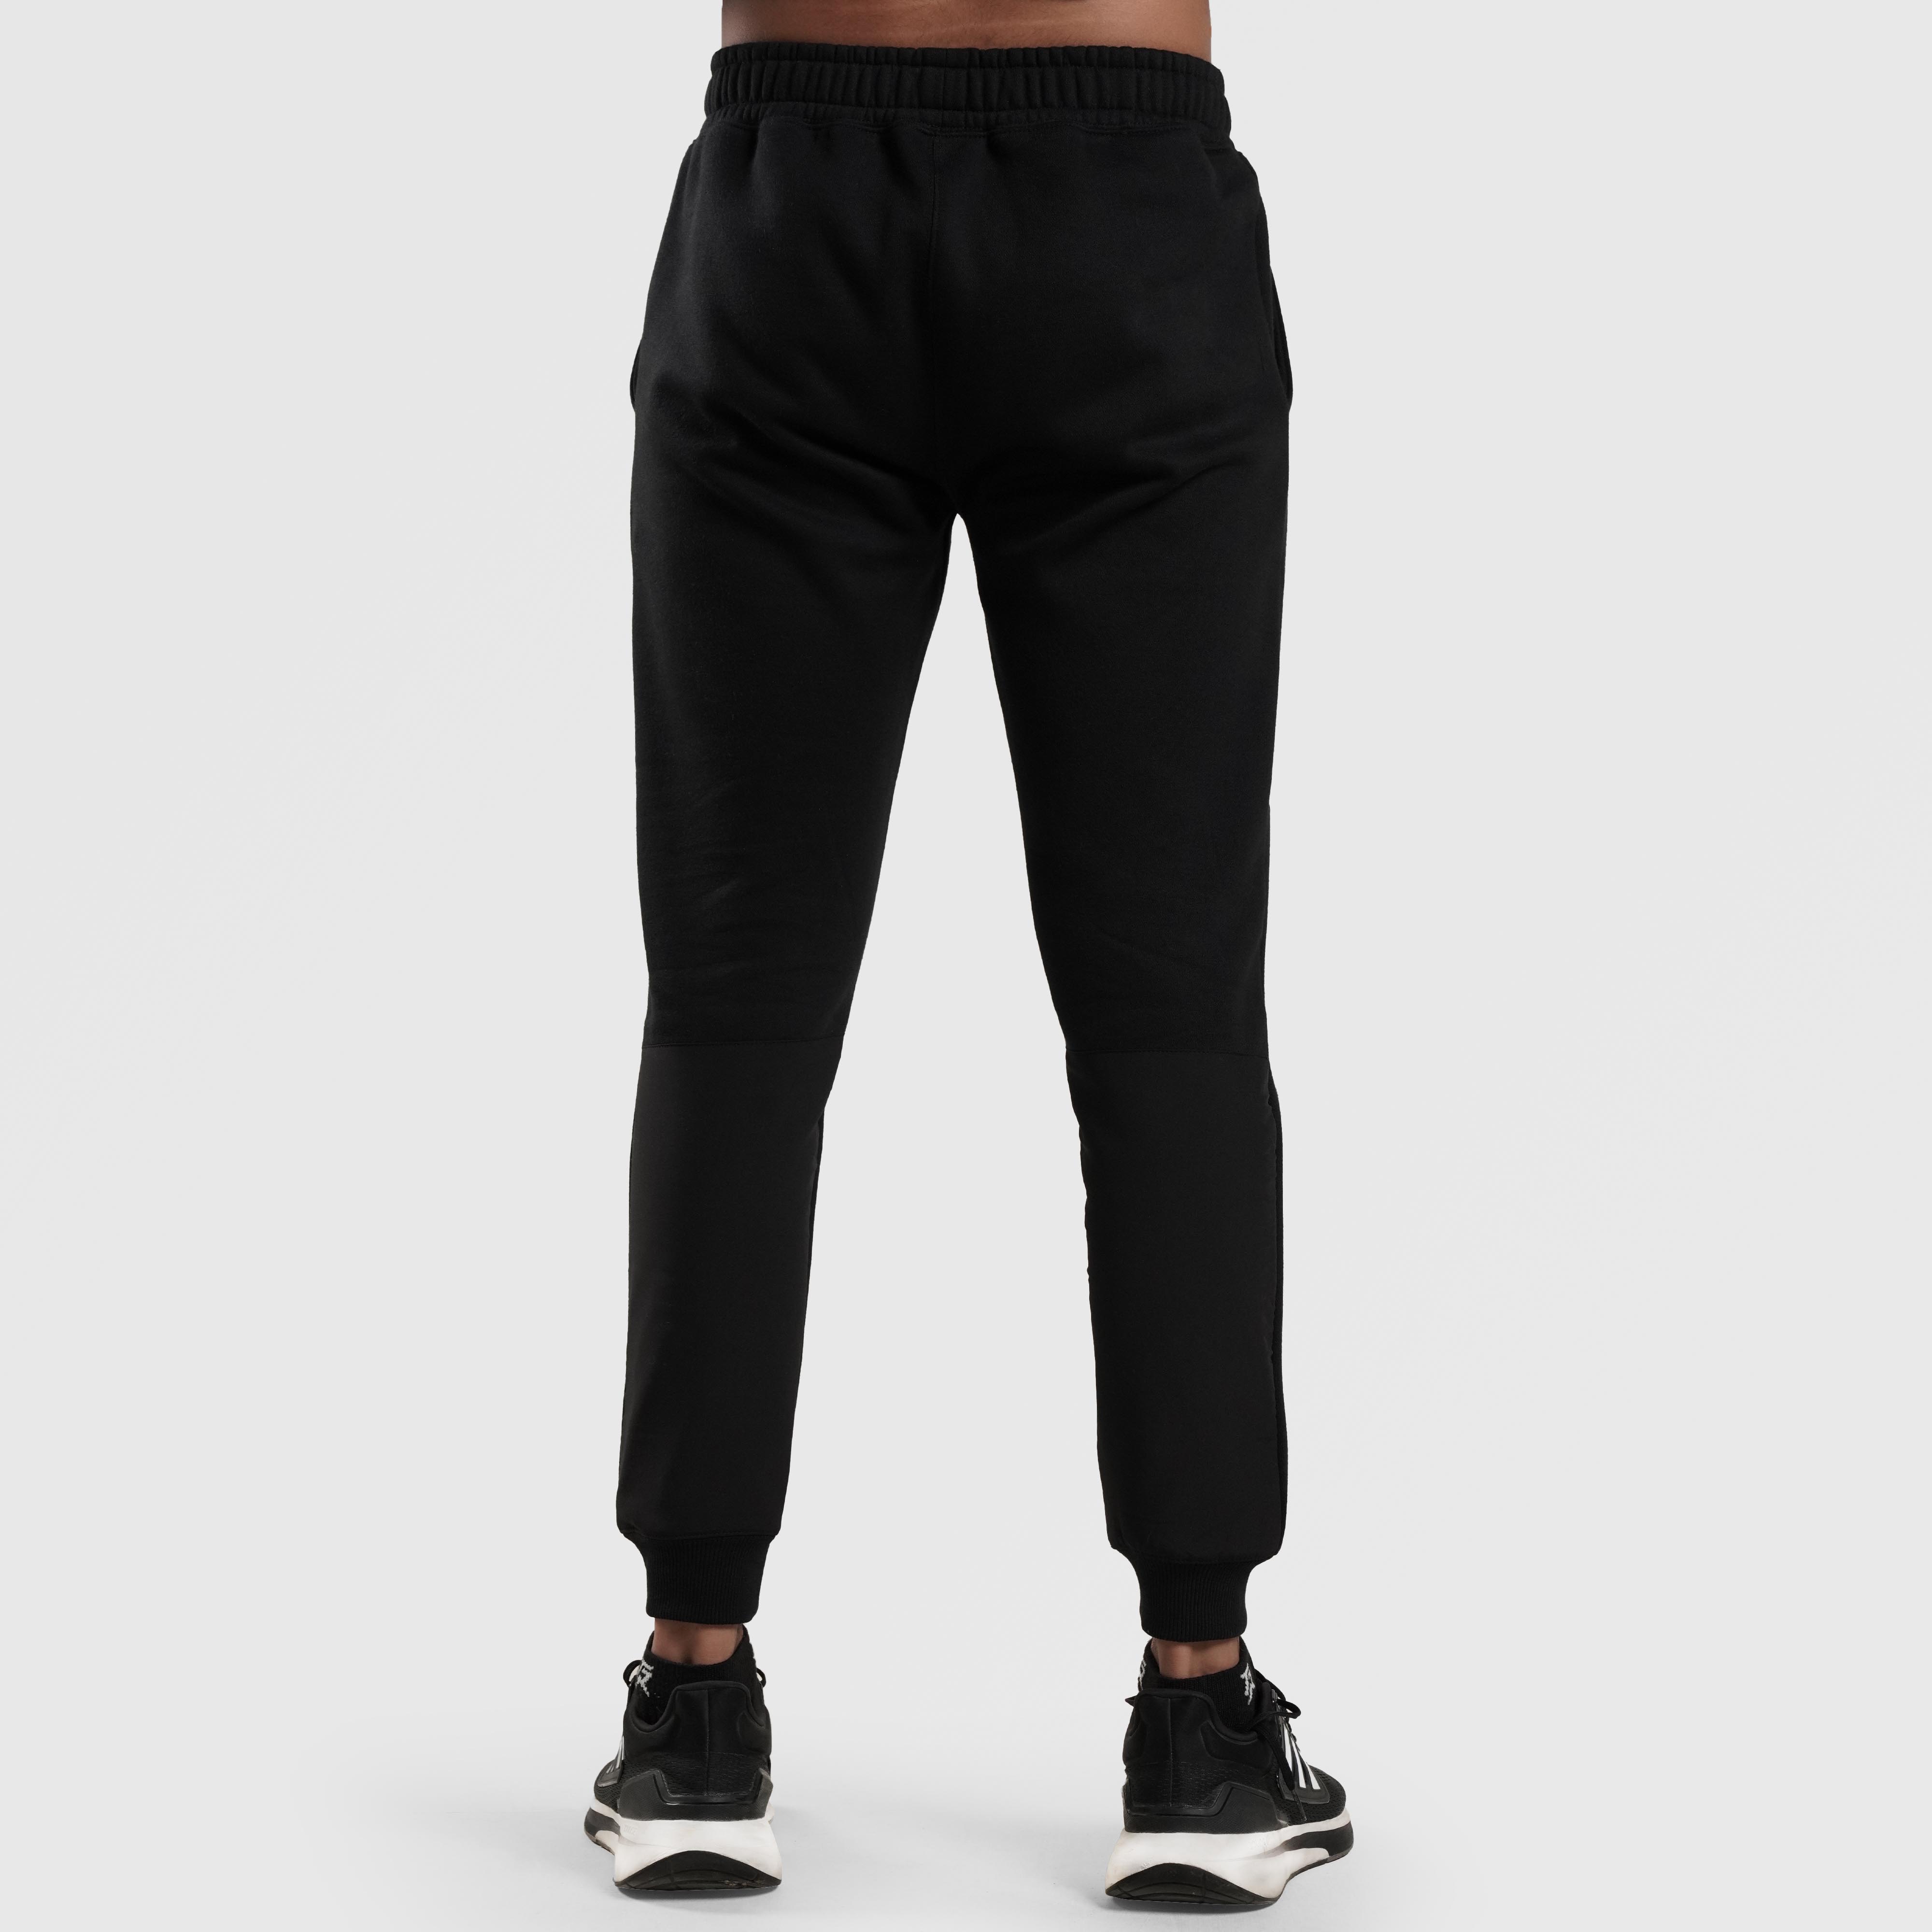 Proto Trousers (Black)